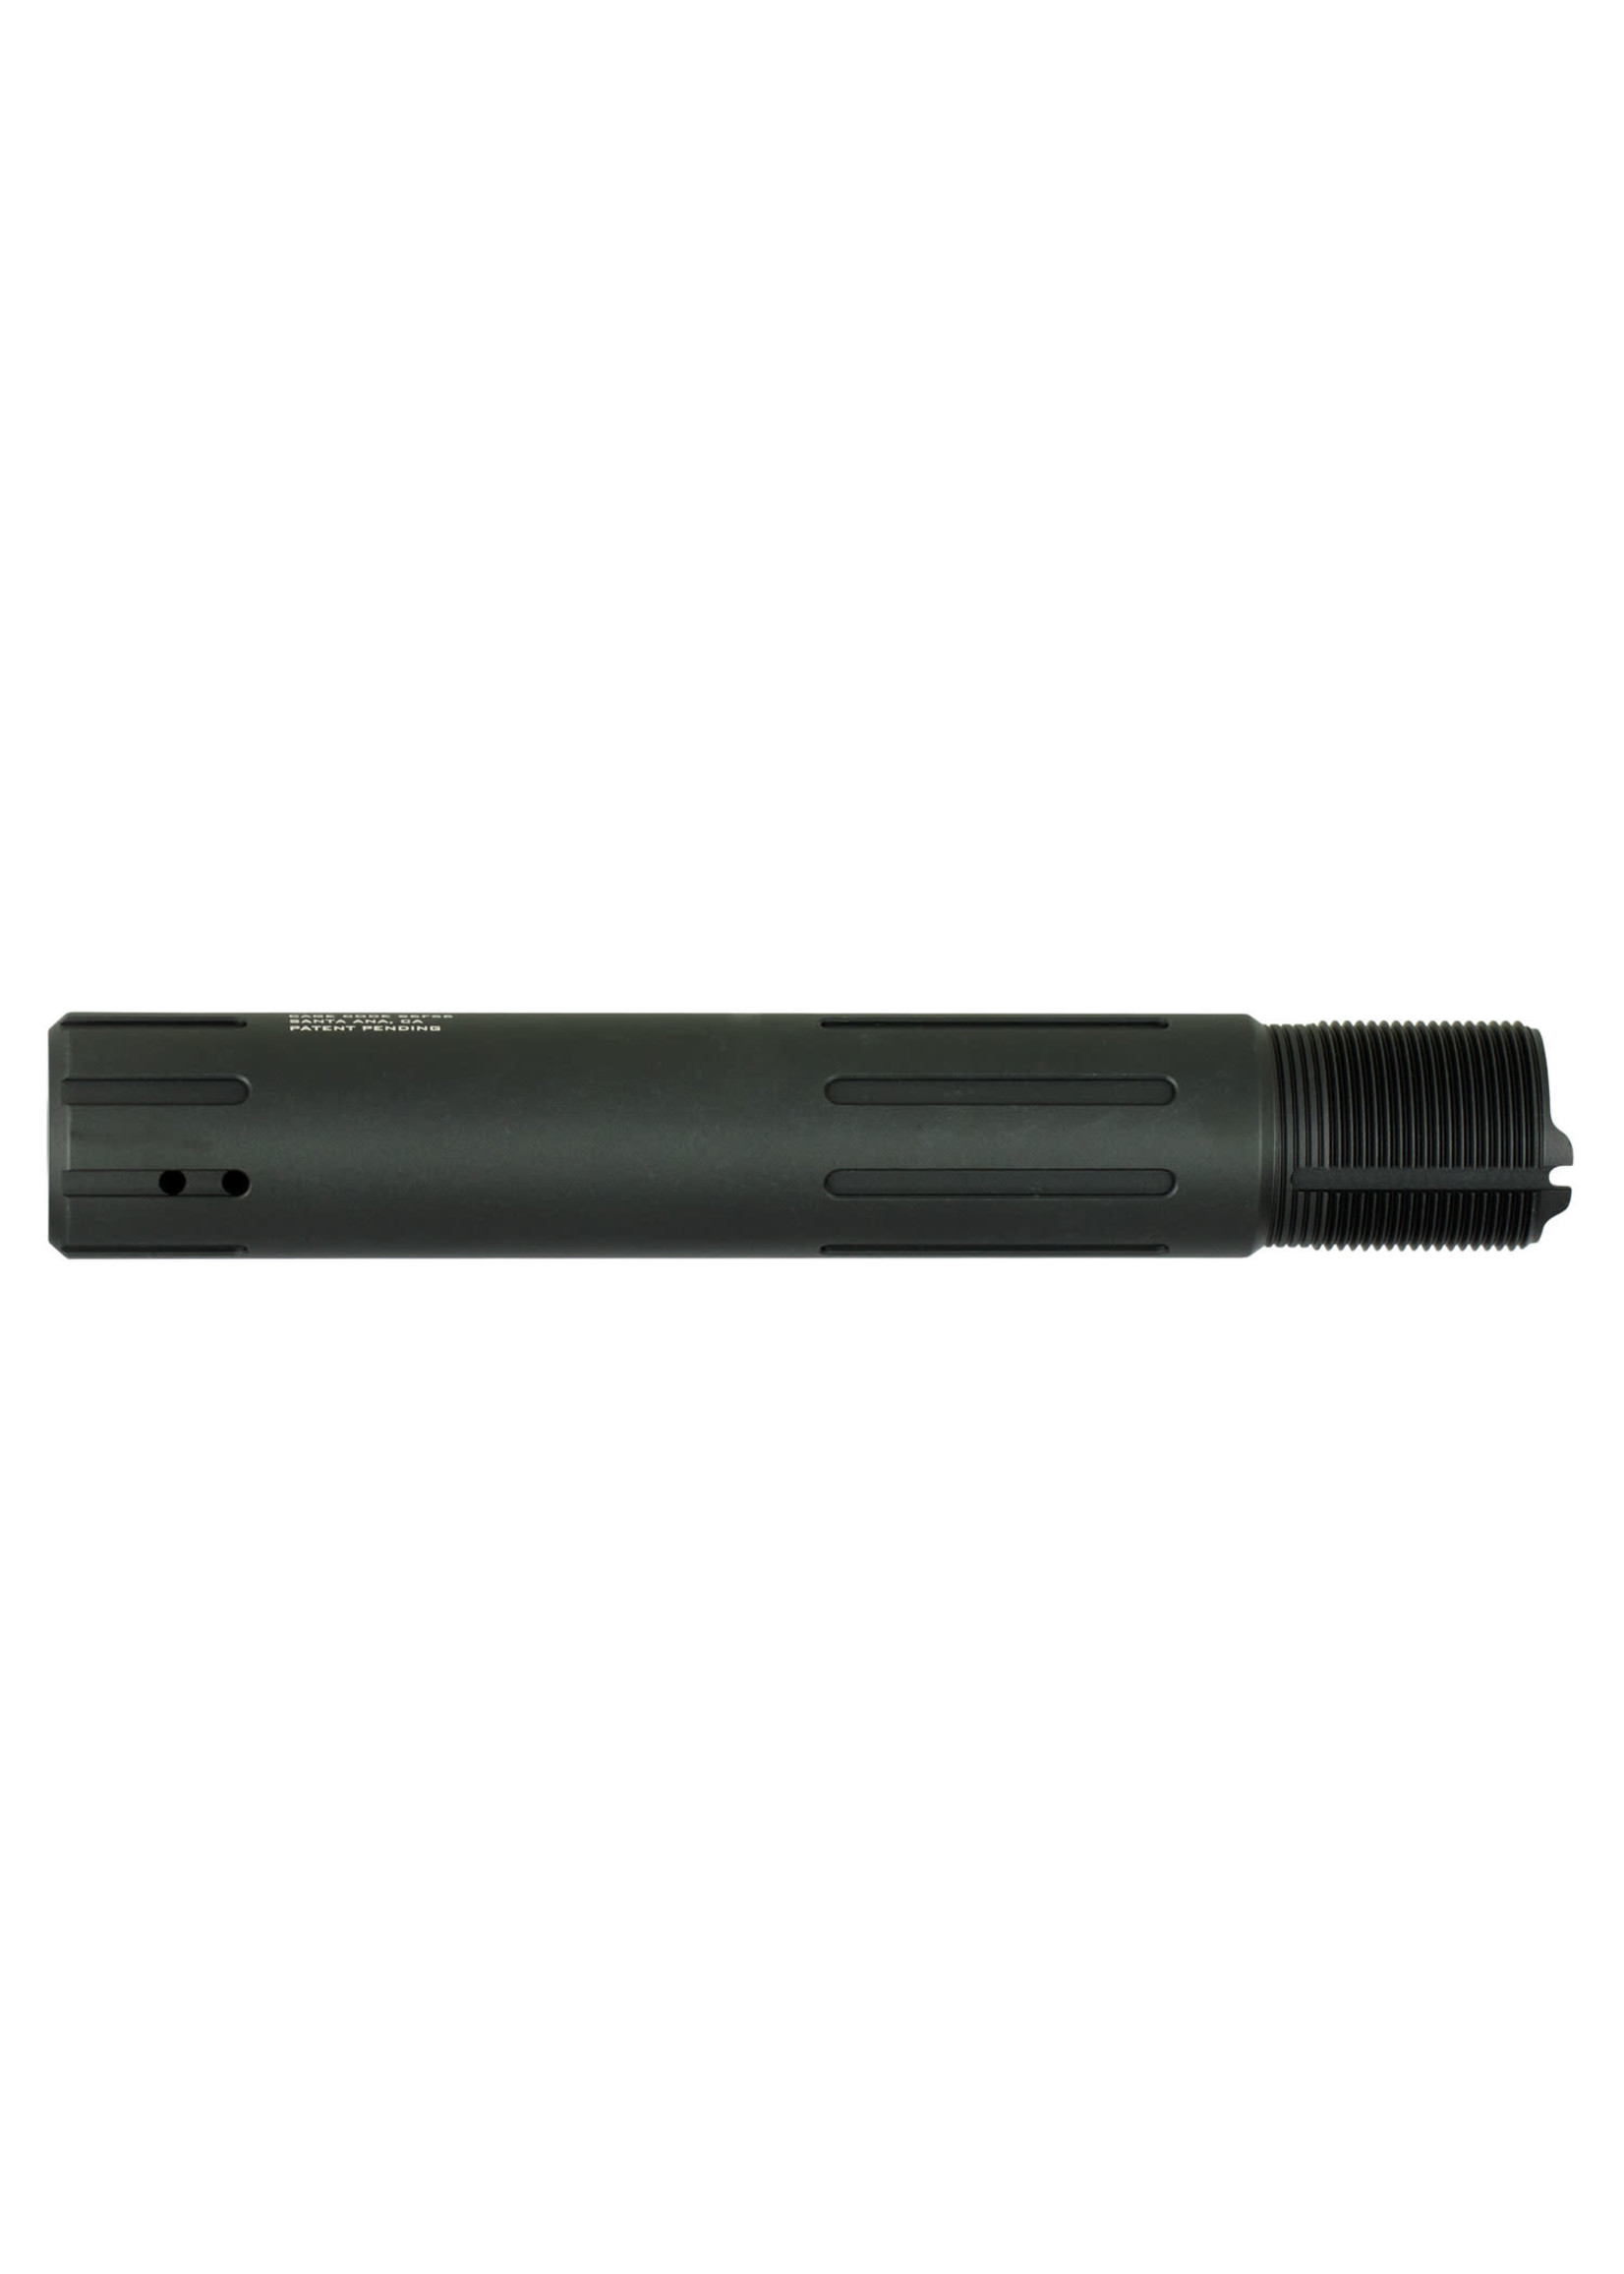 Strike Industries Strike Industries Receiver Extension Tube AR Pistol Platform Black Anodized Aluminum AR Carbine